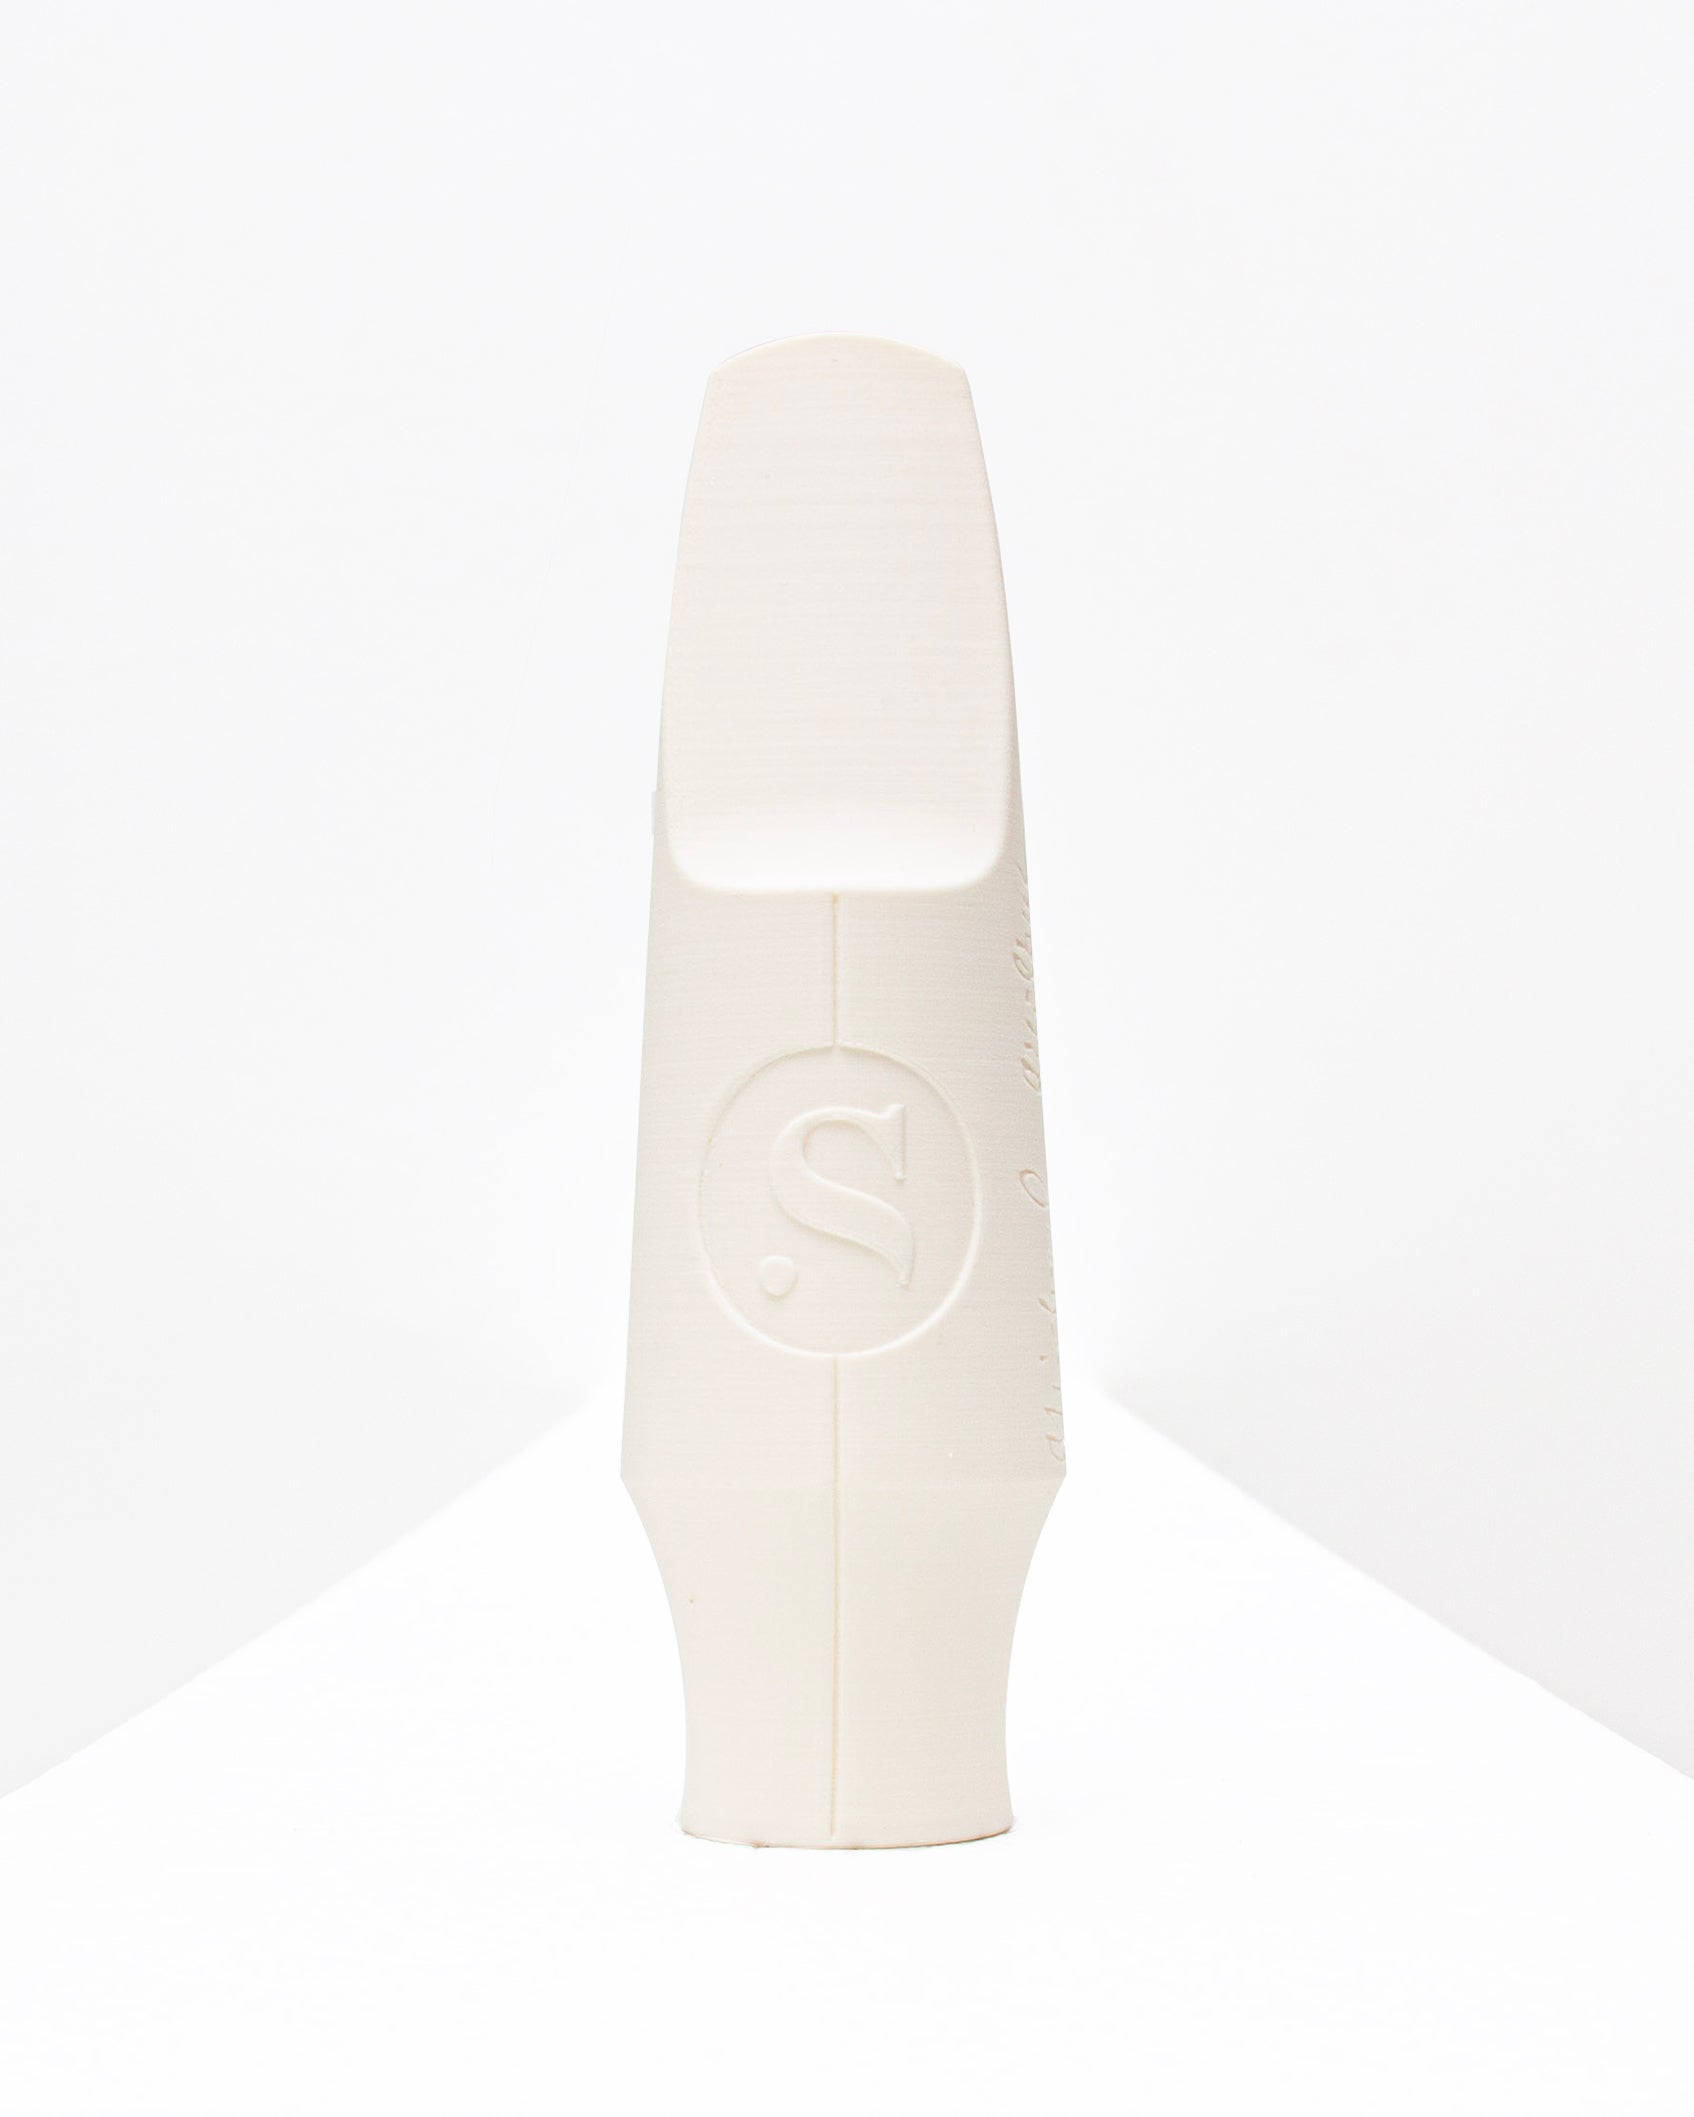 Tenor Signature Saxophone mouthpiece - Sylvain Rifflet by Syos - 6* / Arctic White